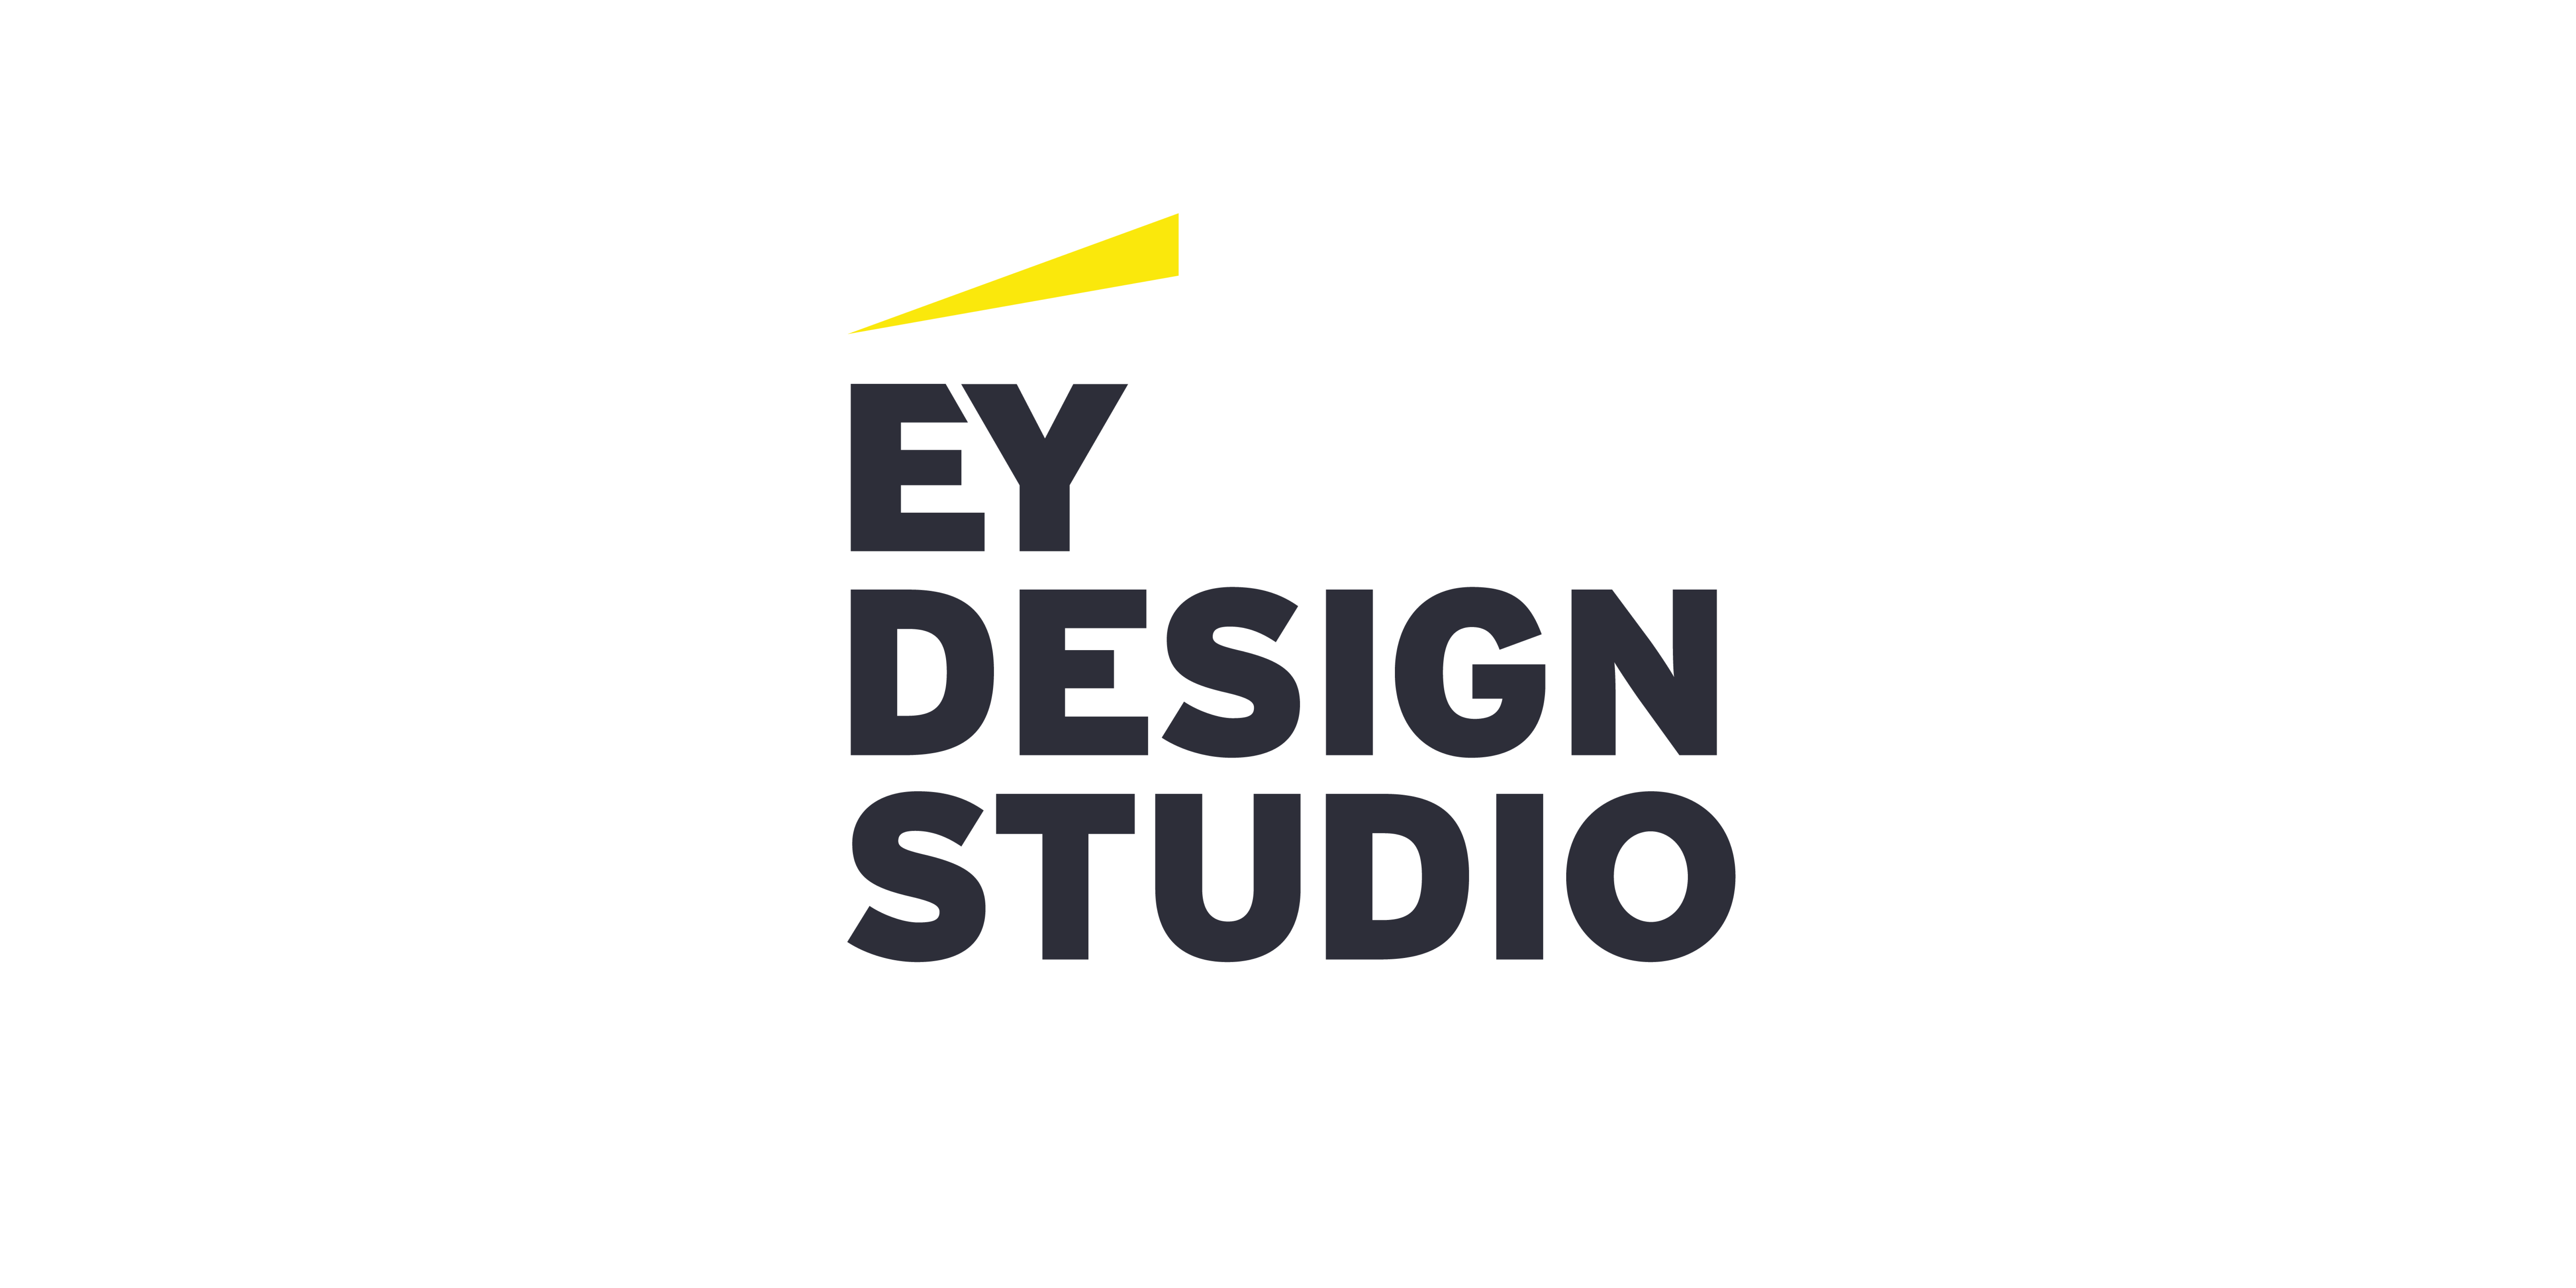 EY Design Studio Logo